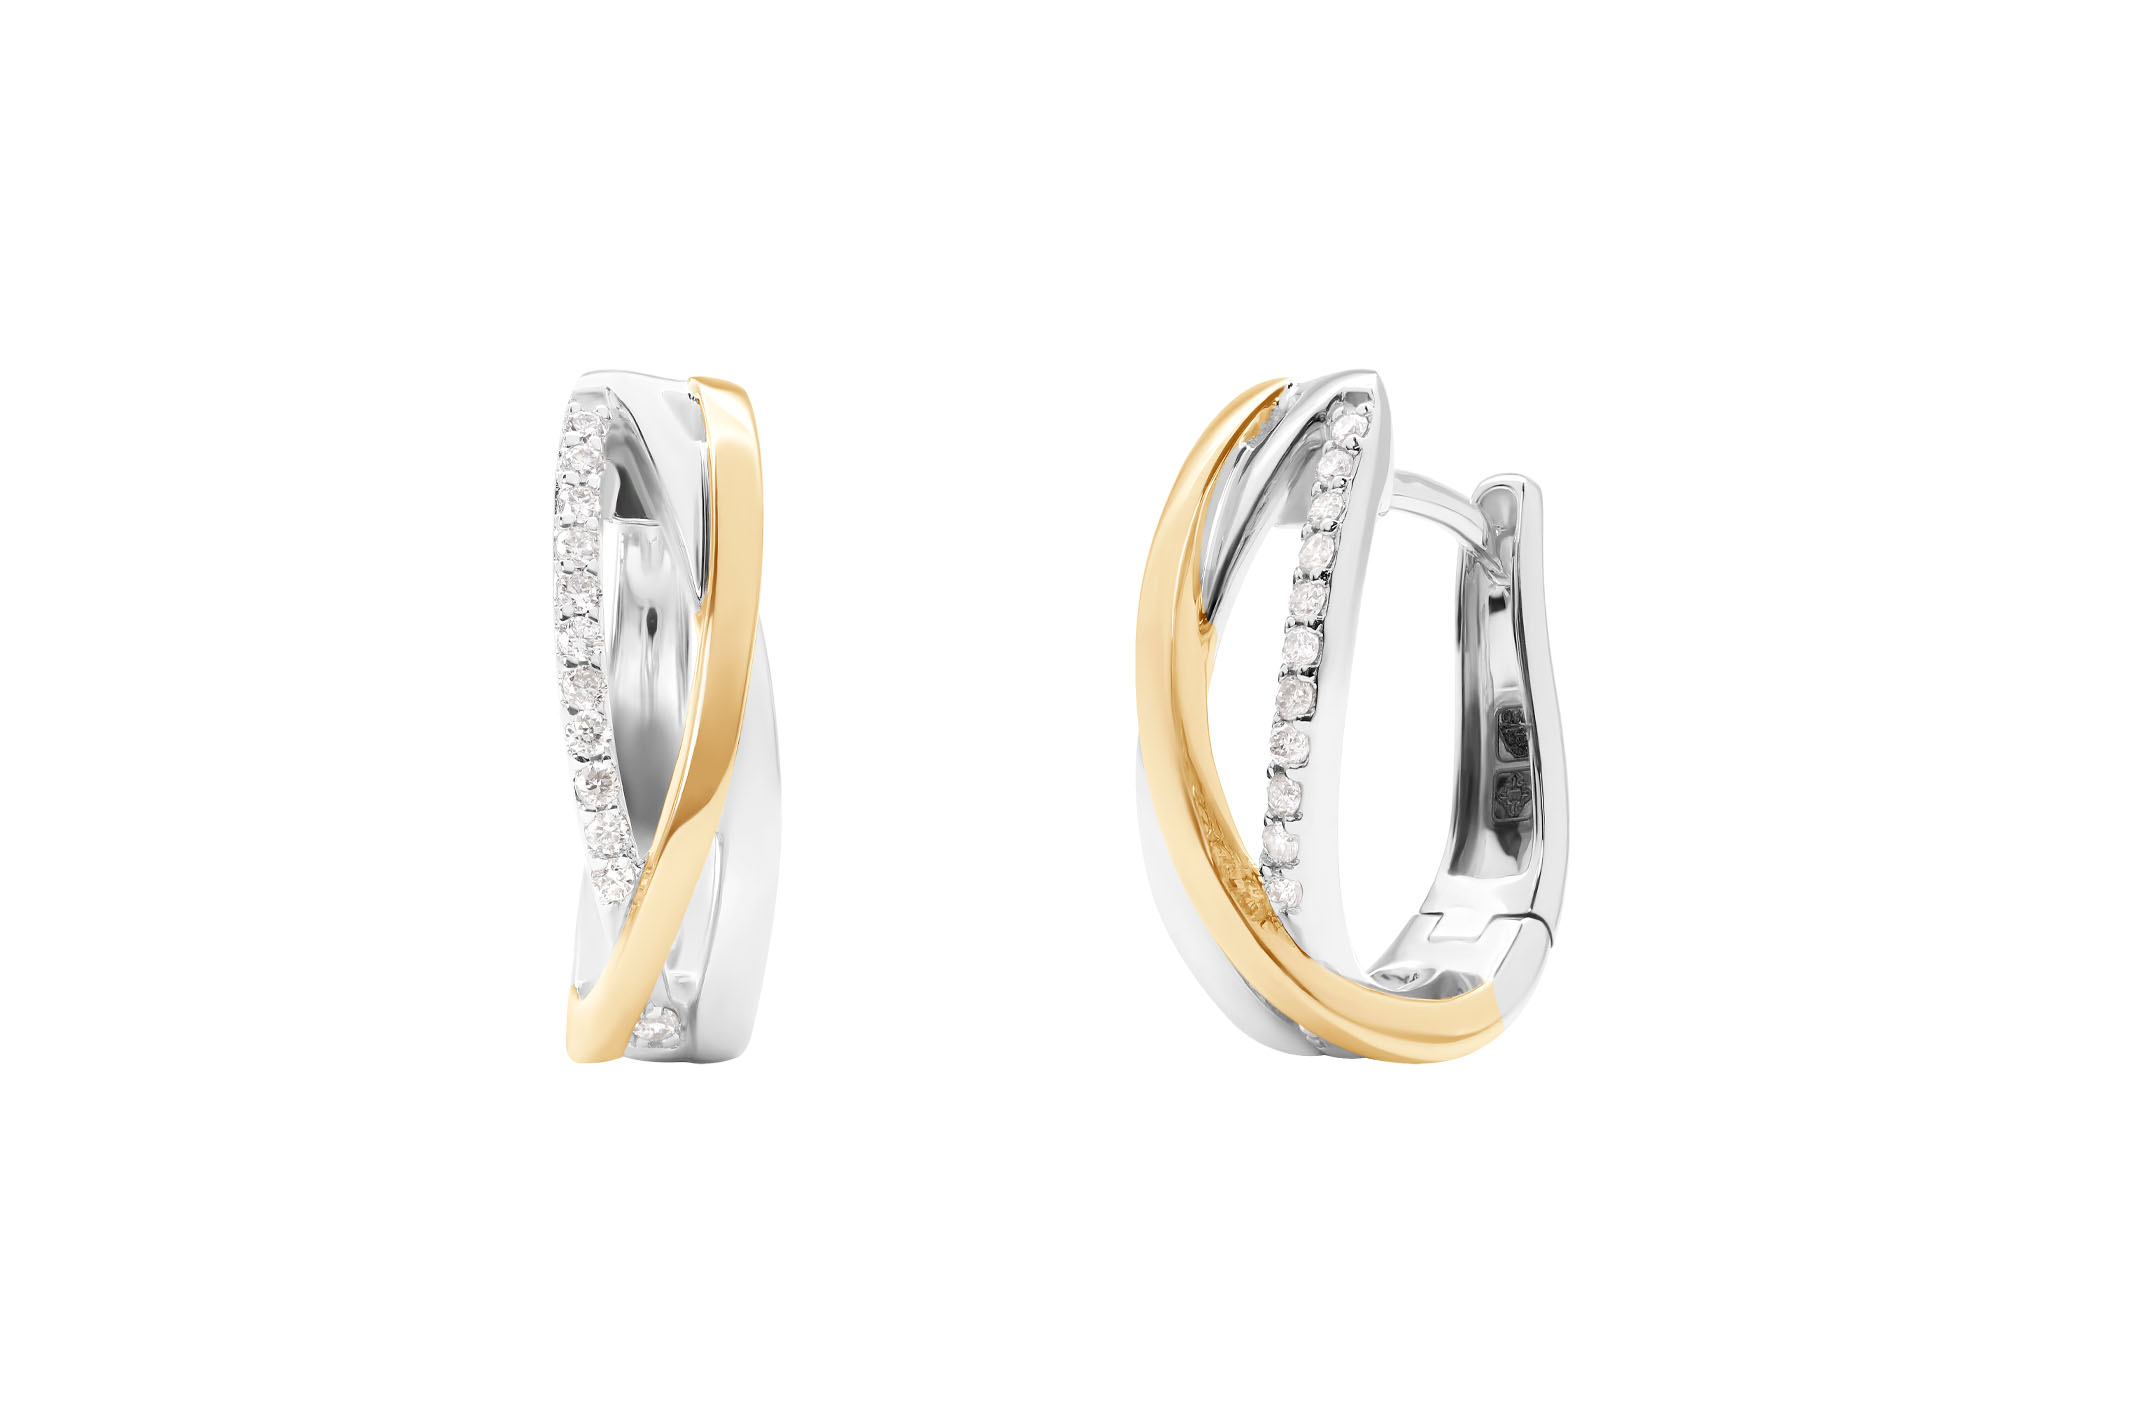 Jewel: earrings;Material: gold 18k;Weight: 4.5 gr;Stones: 24 diamantes 0.13 ct GH/VVS;Color: bicolor;Size: 1.5 cm